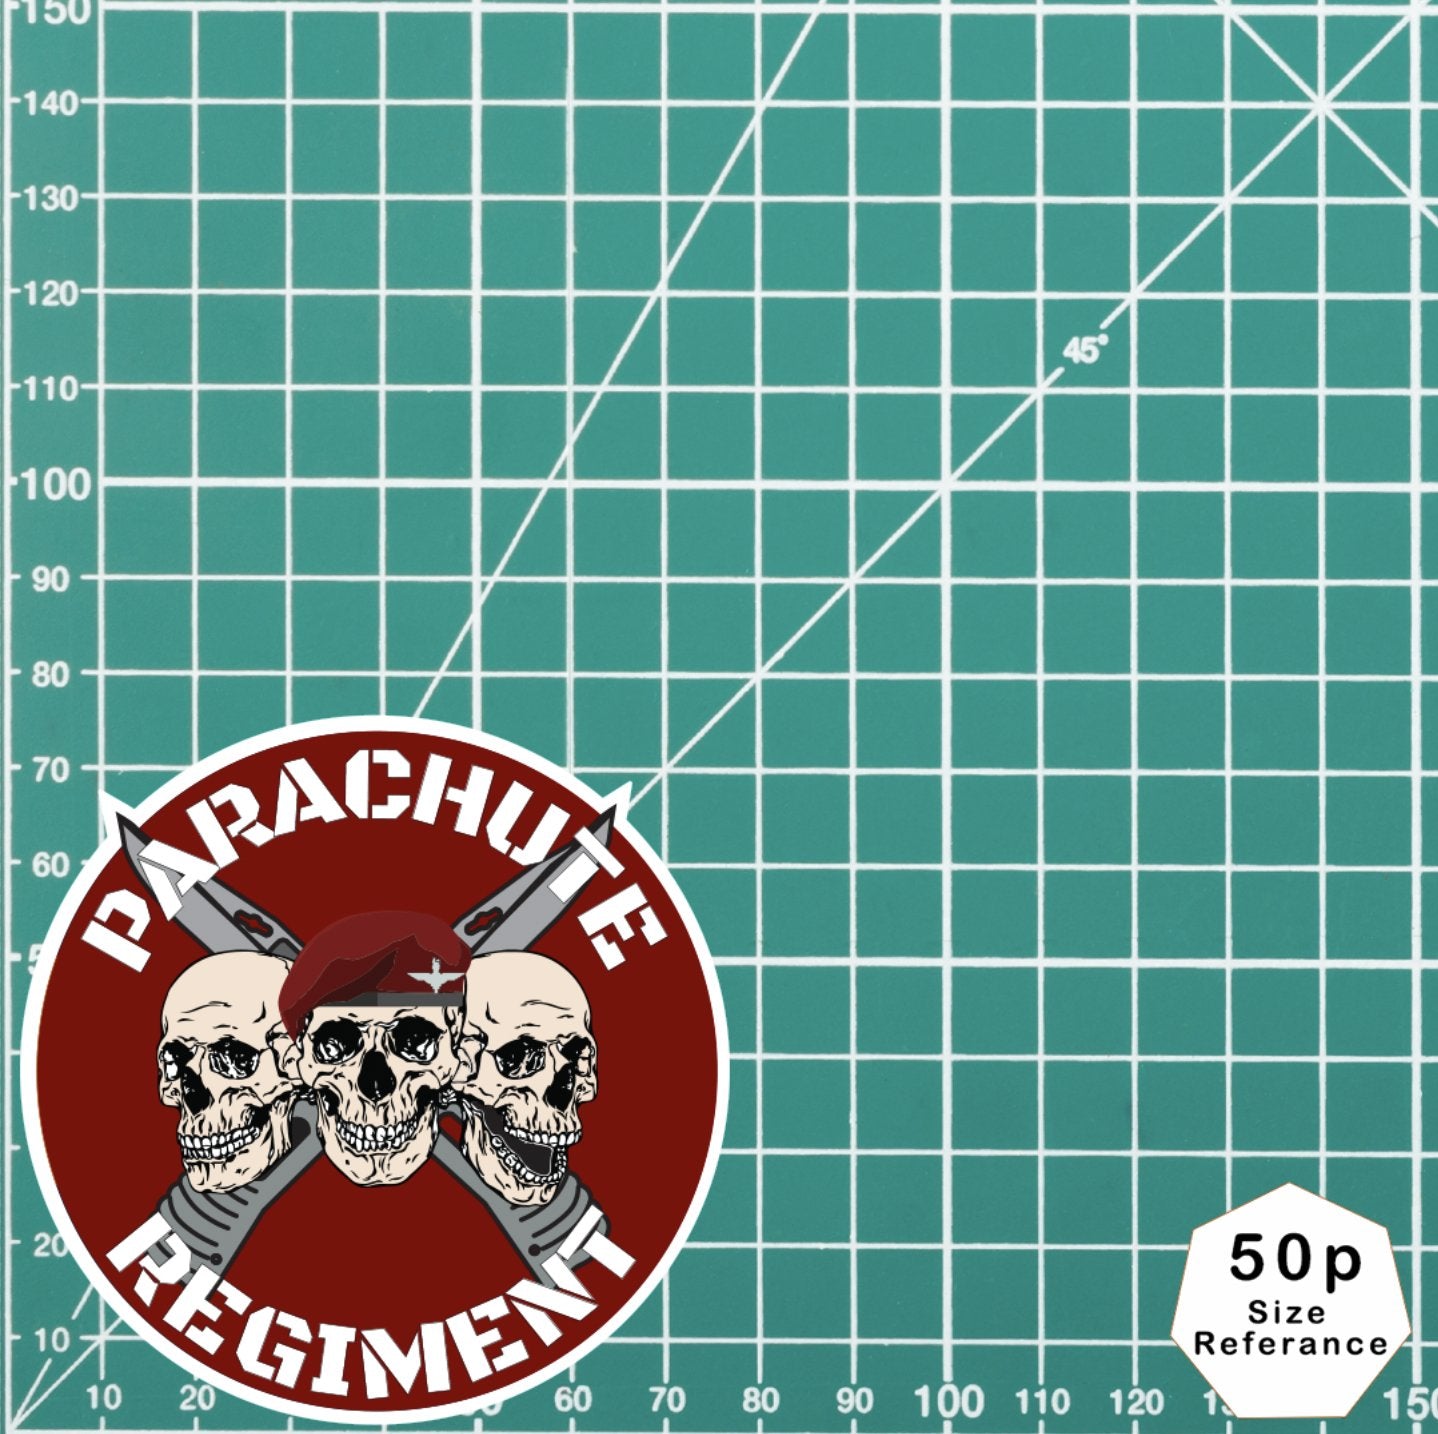 Parachute Regiment Waterproof Vinyl Stickers Three Skull Design redplume